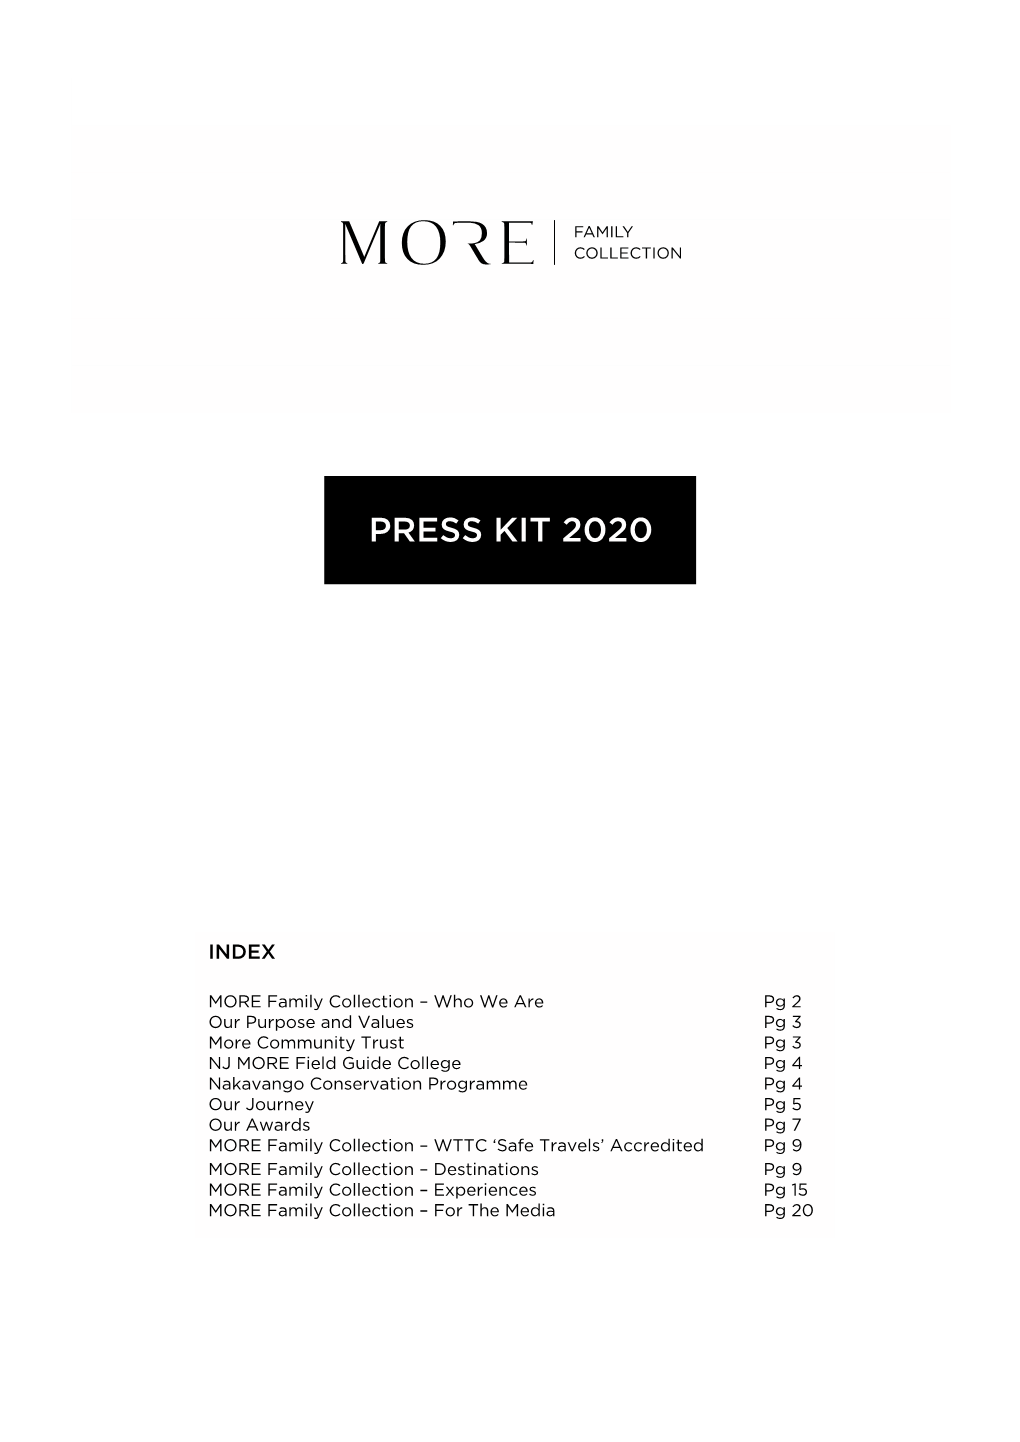 Press Kit 2020